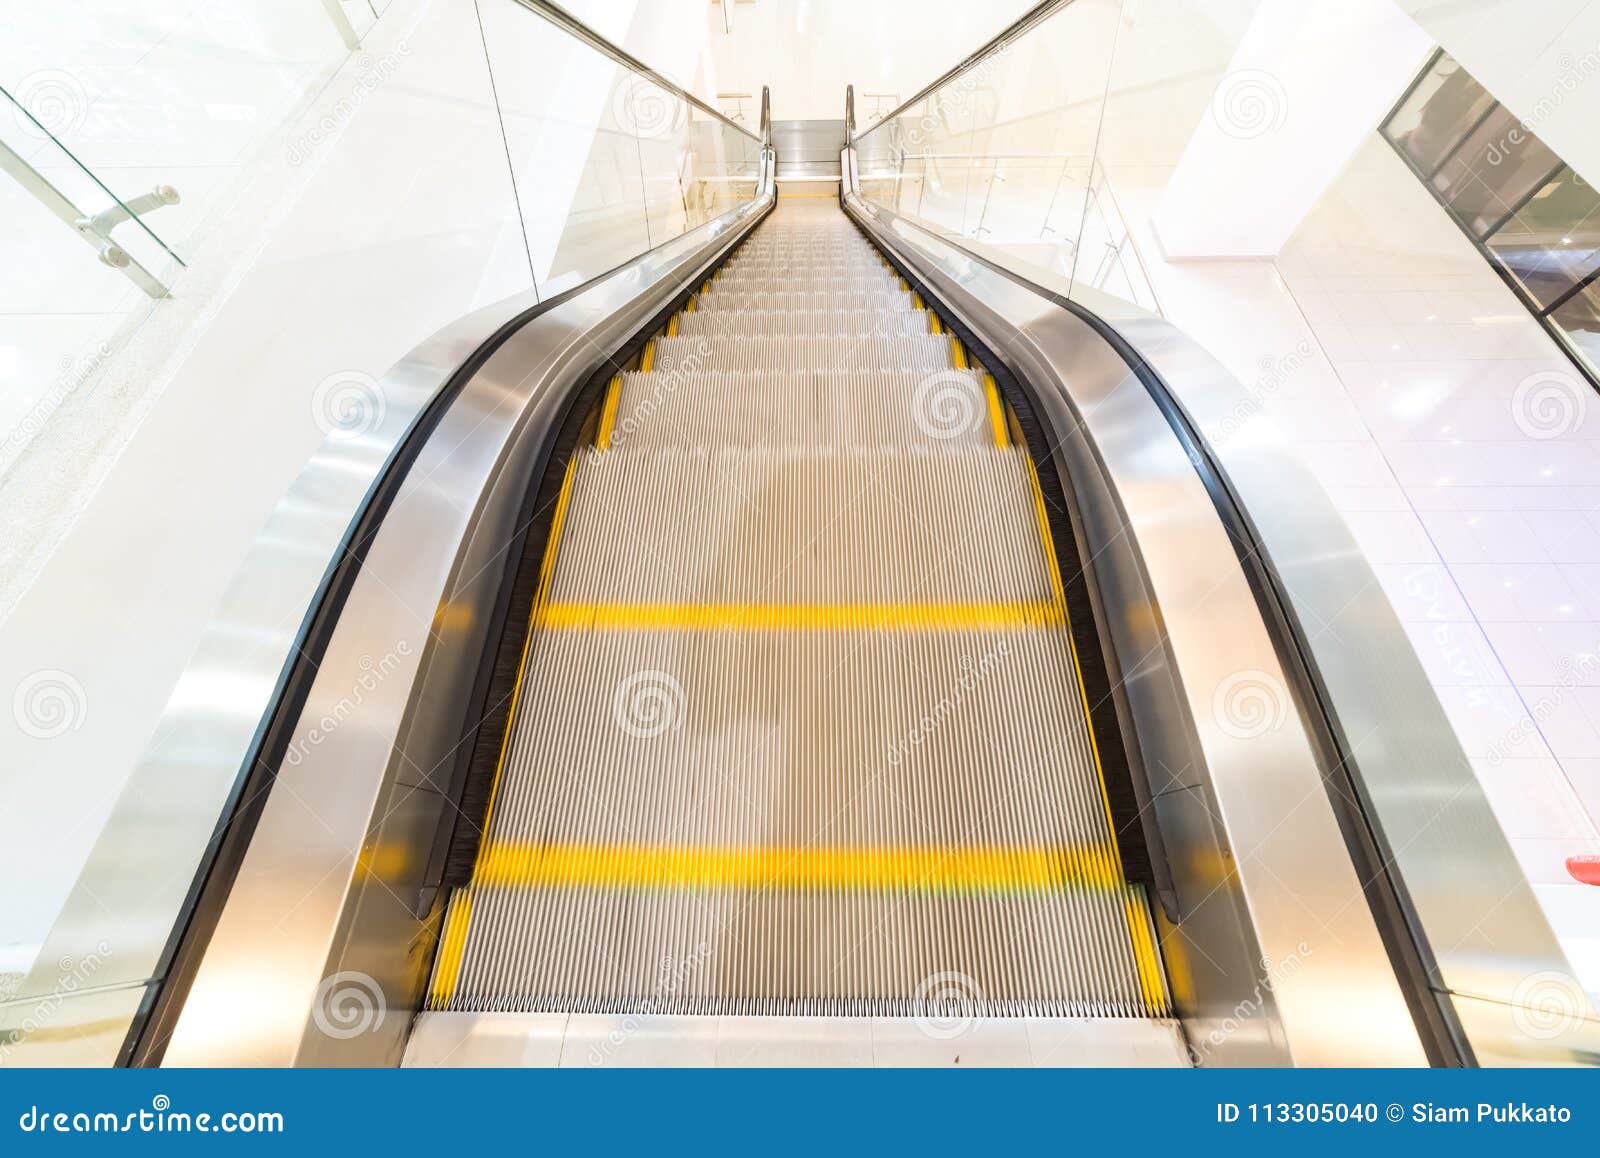 Walmart Supercenter two floors escalator, Stock Video